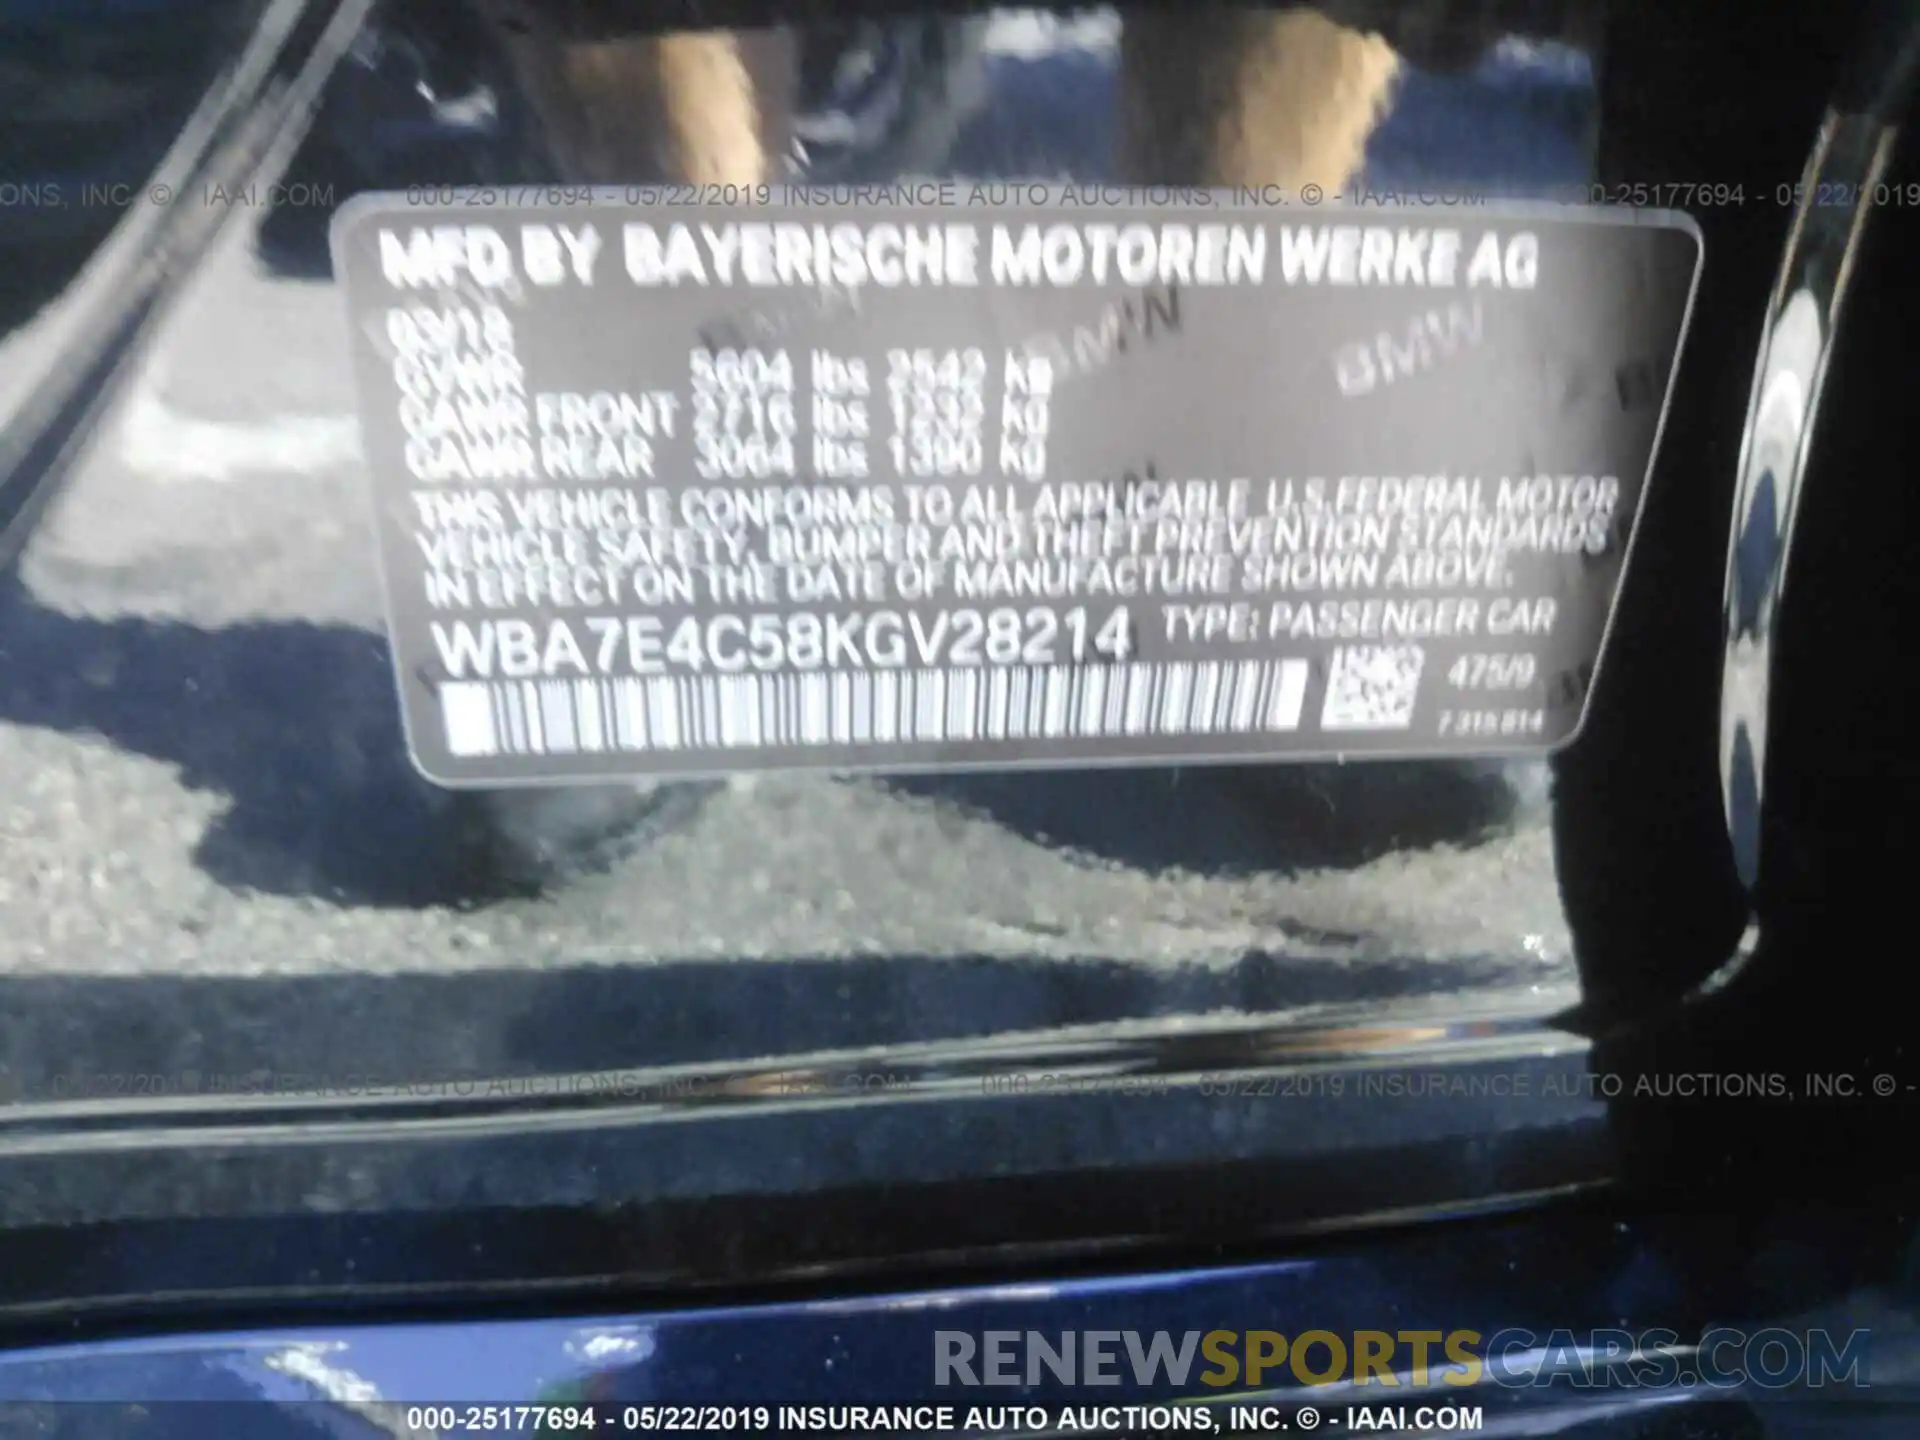 9 Photograph of a damaged car WBA7E4C58KGV28214 BMW 740 2019